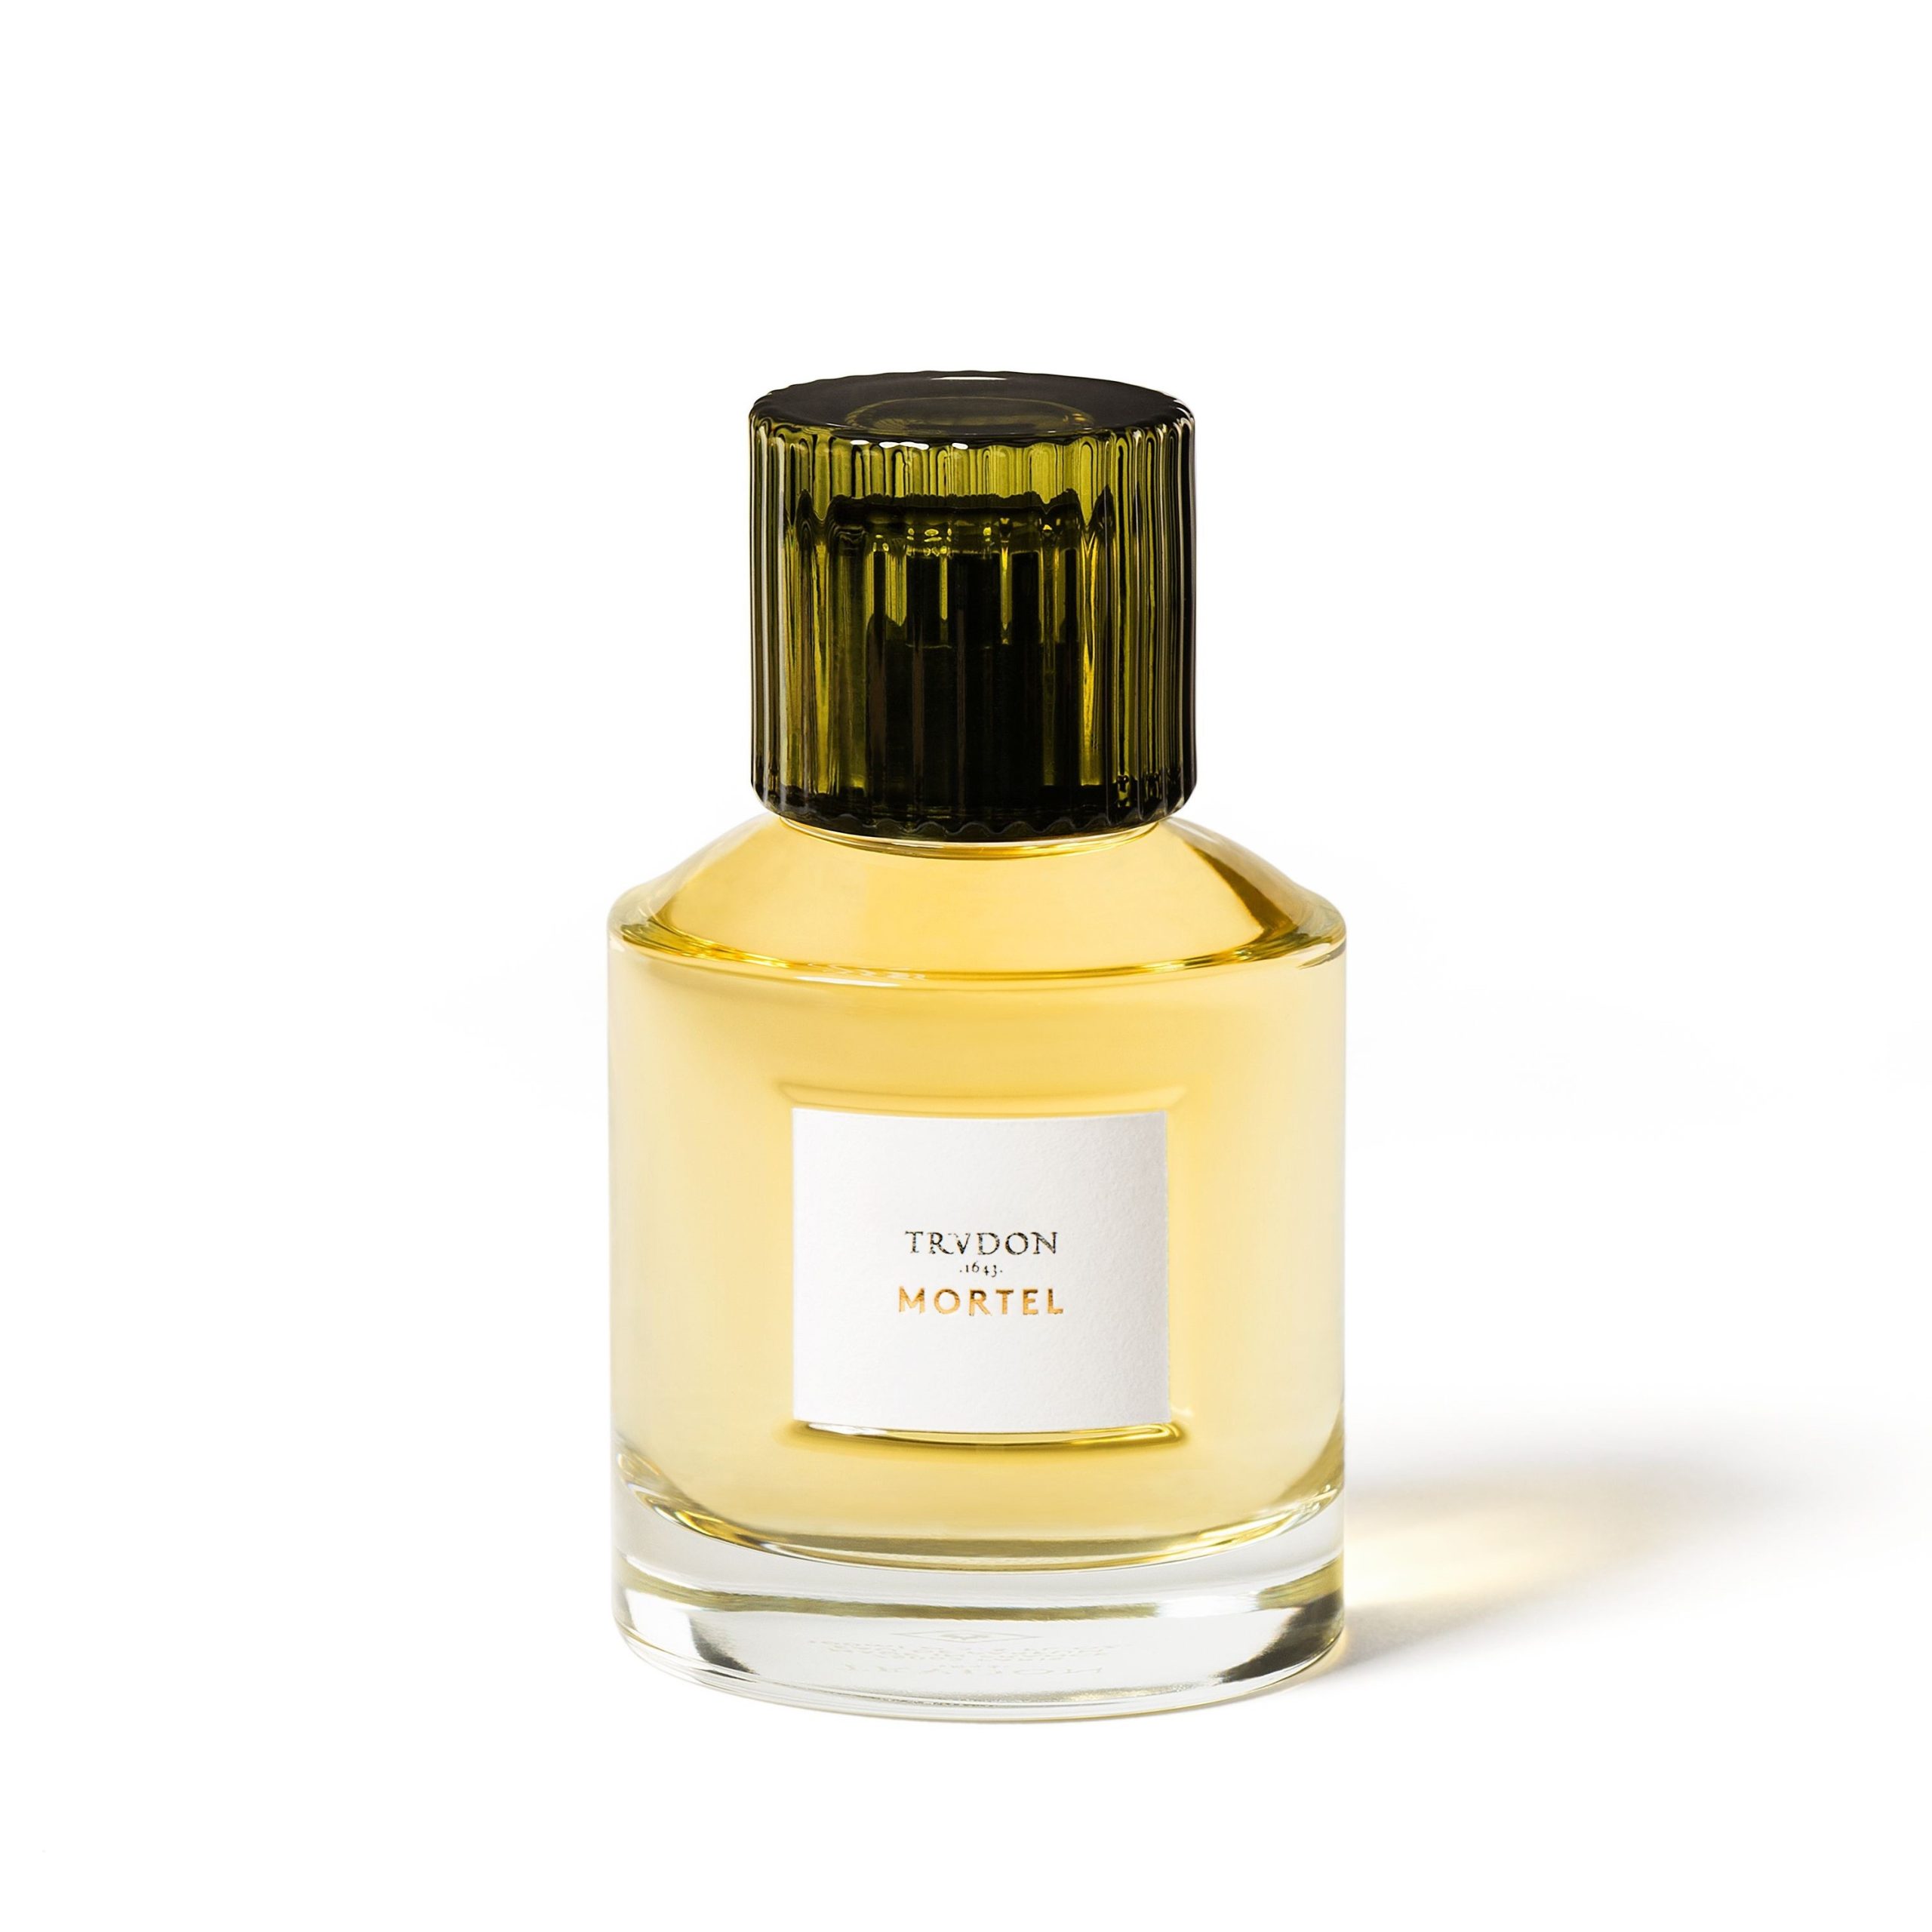 Trudon Mortel EDP 100ml - Lore Perfumery